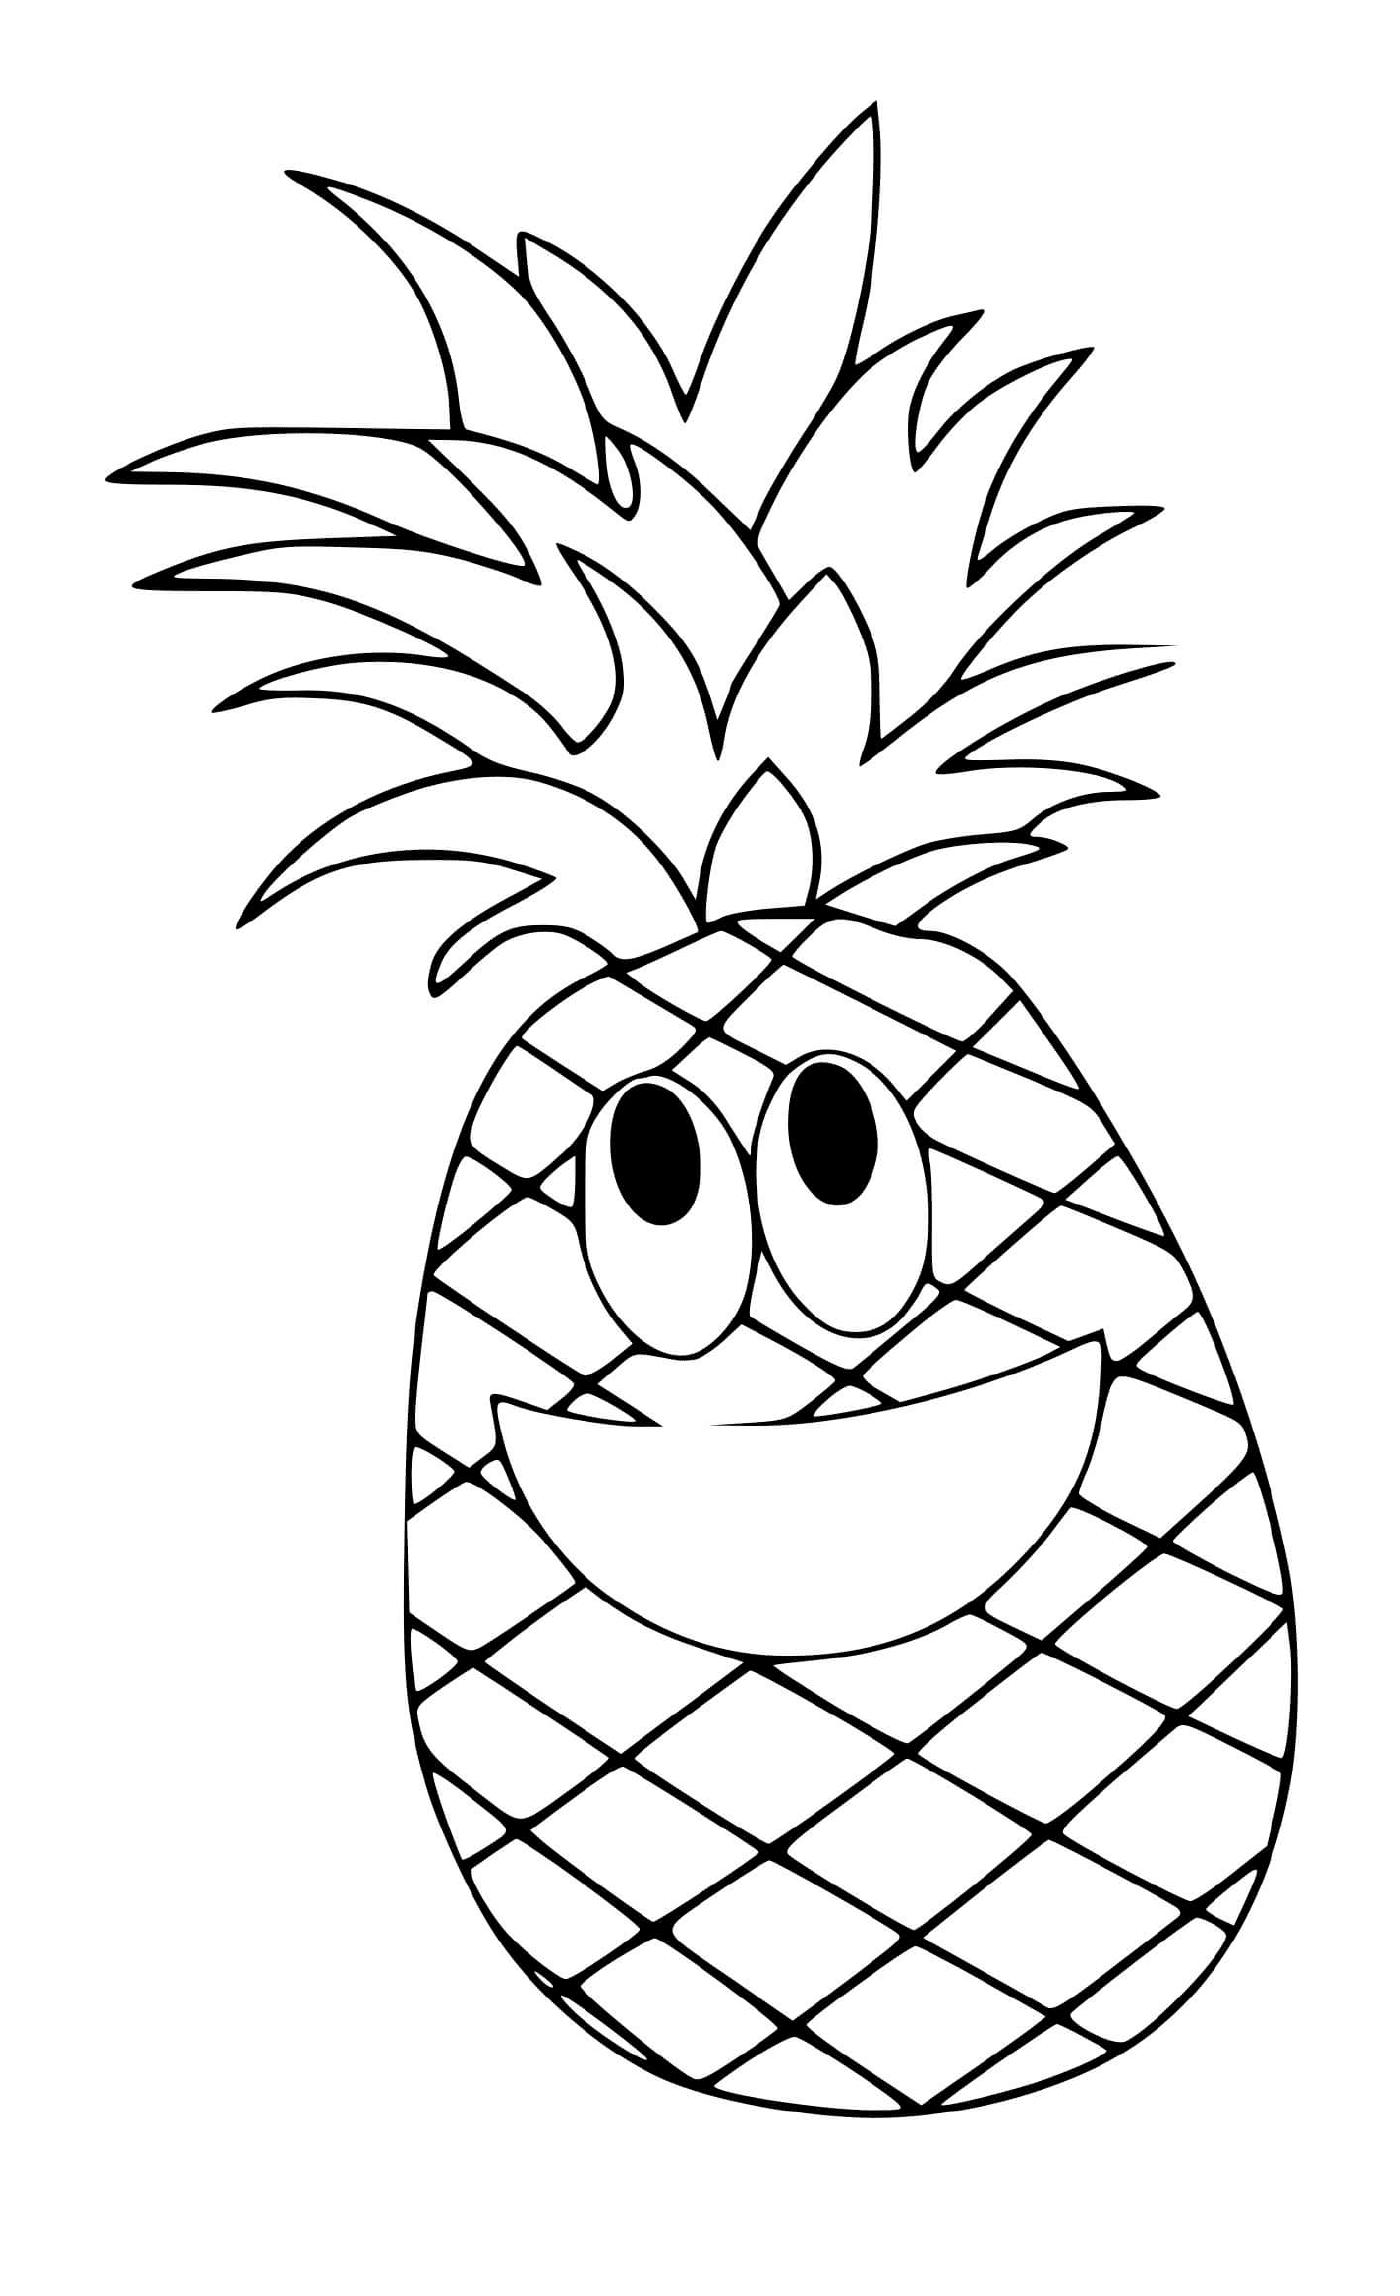   Un ananas joyeux et animé 